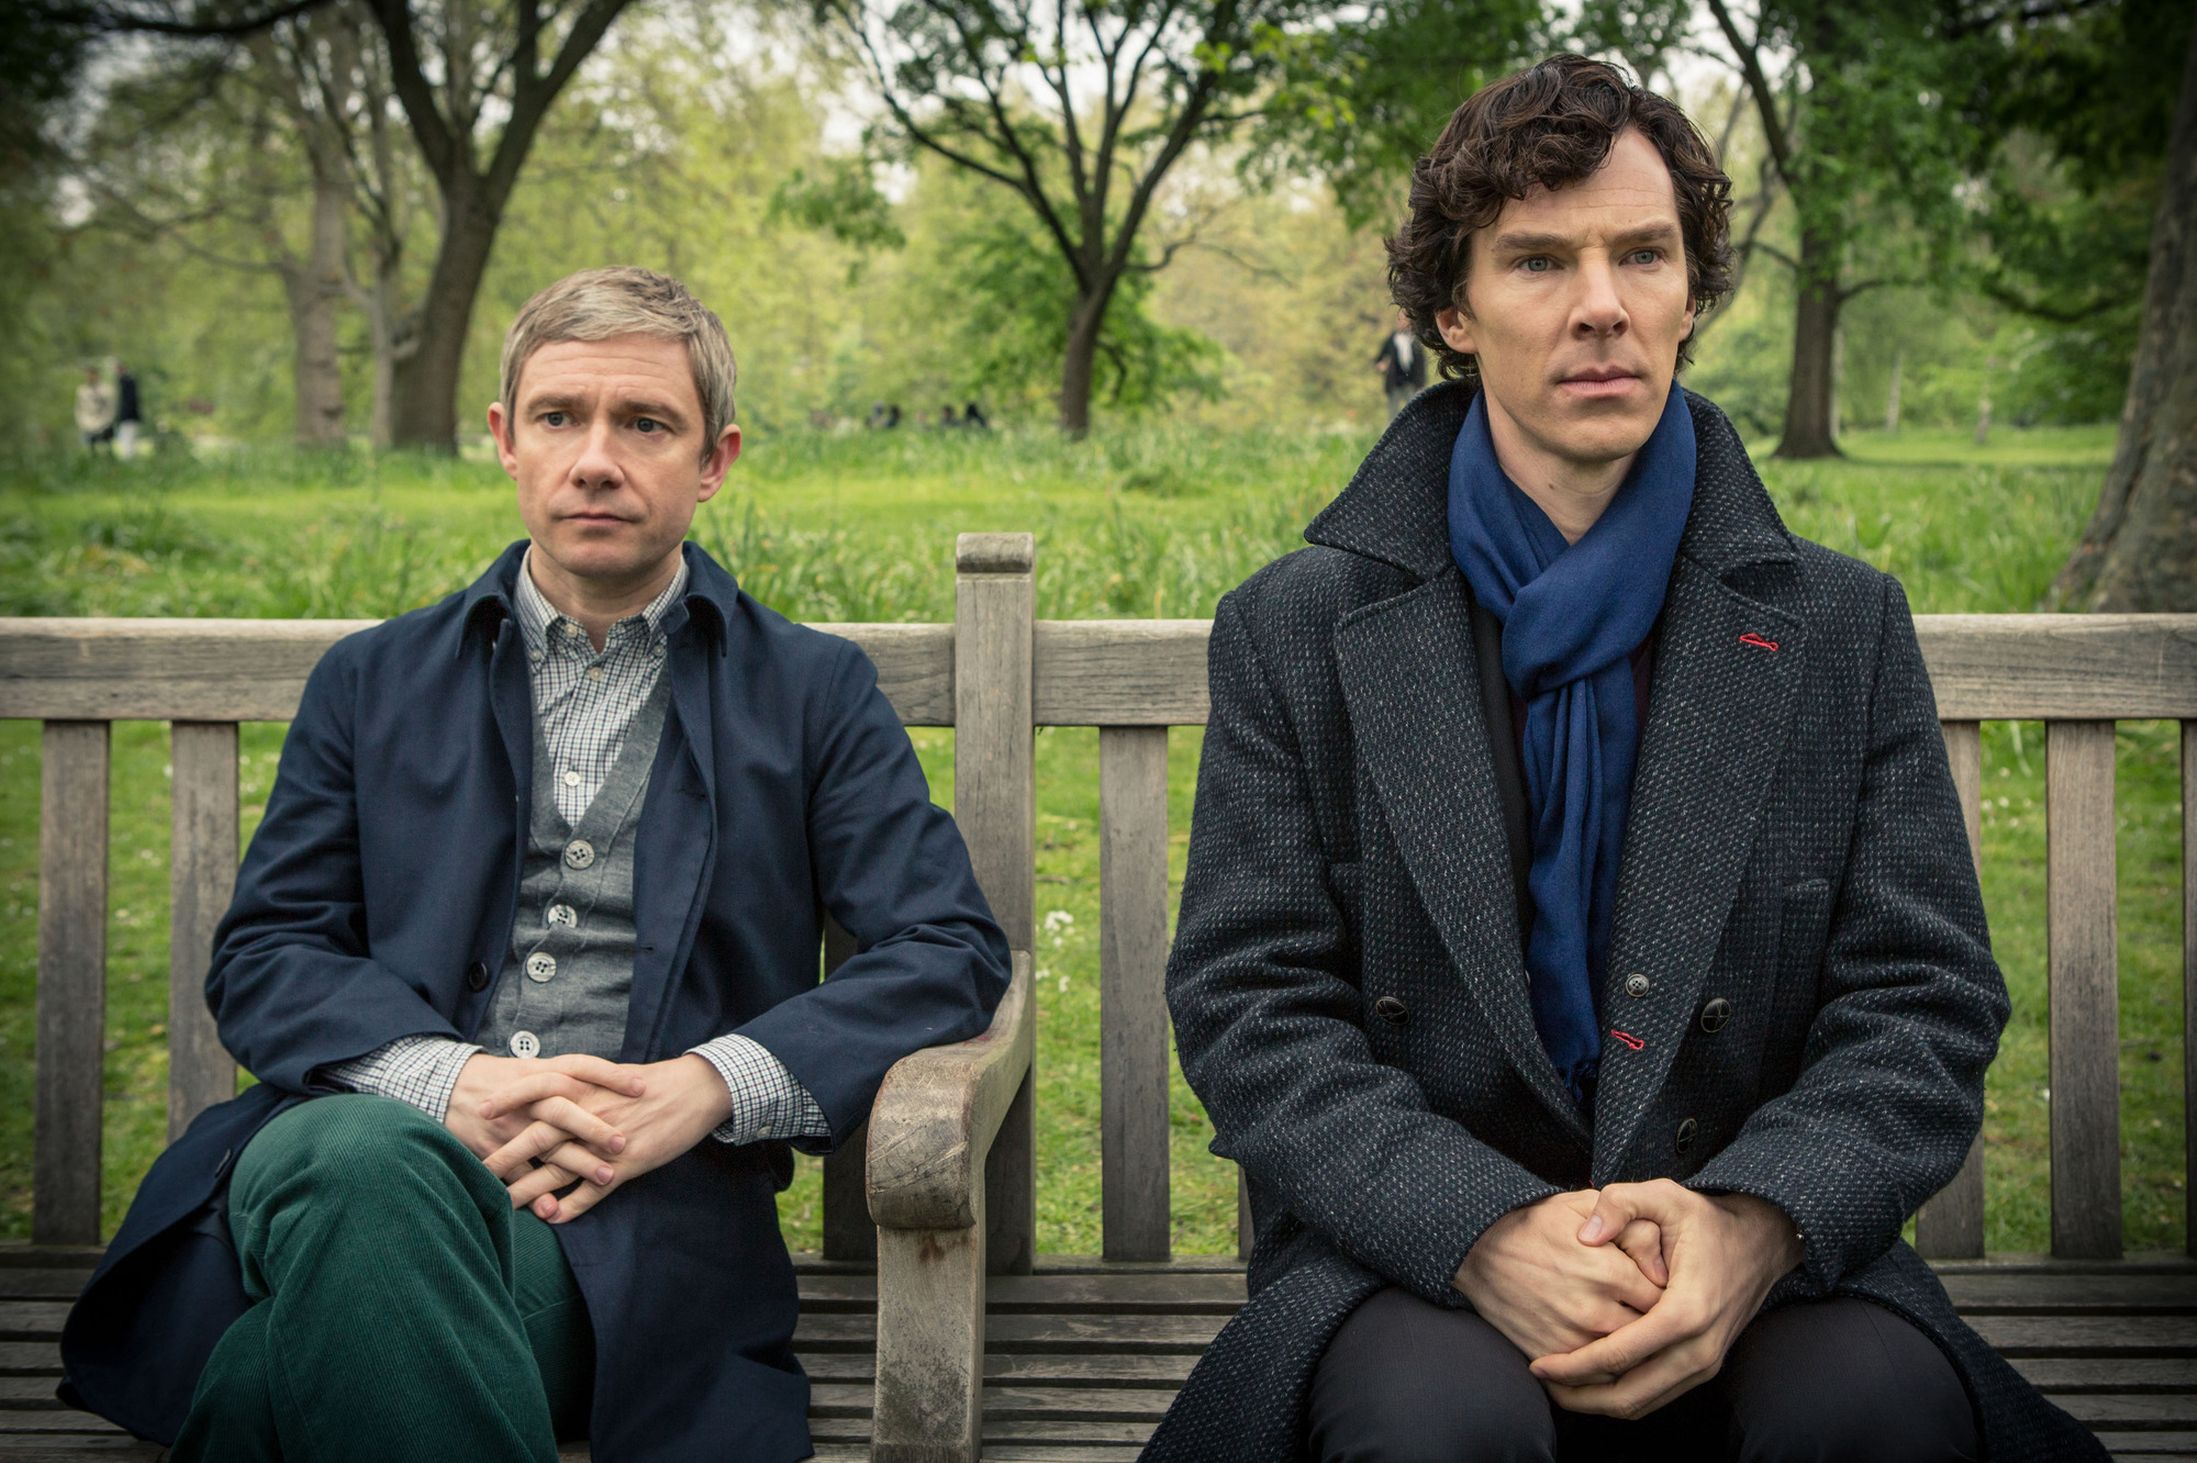 We're waiting for more "Sherlock" too, guys. (Photo: Courtesy of (C)Robert Viglasky/Hartswood Films for MASTERPIECE)